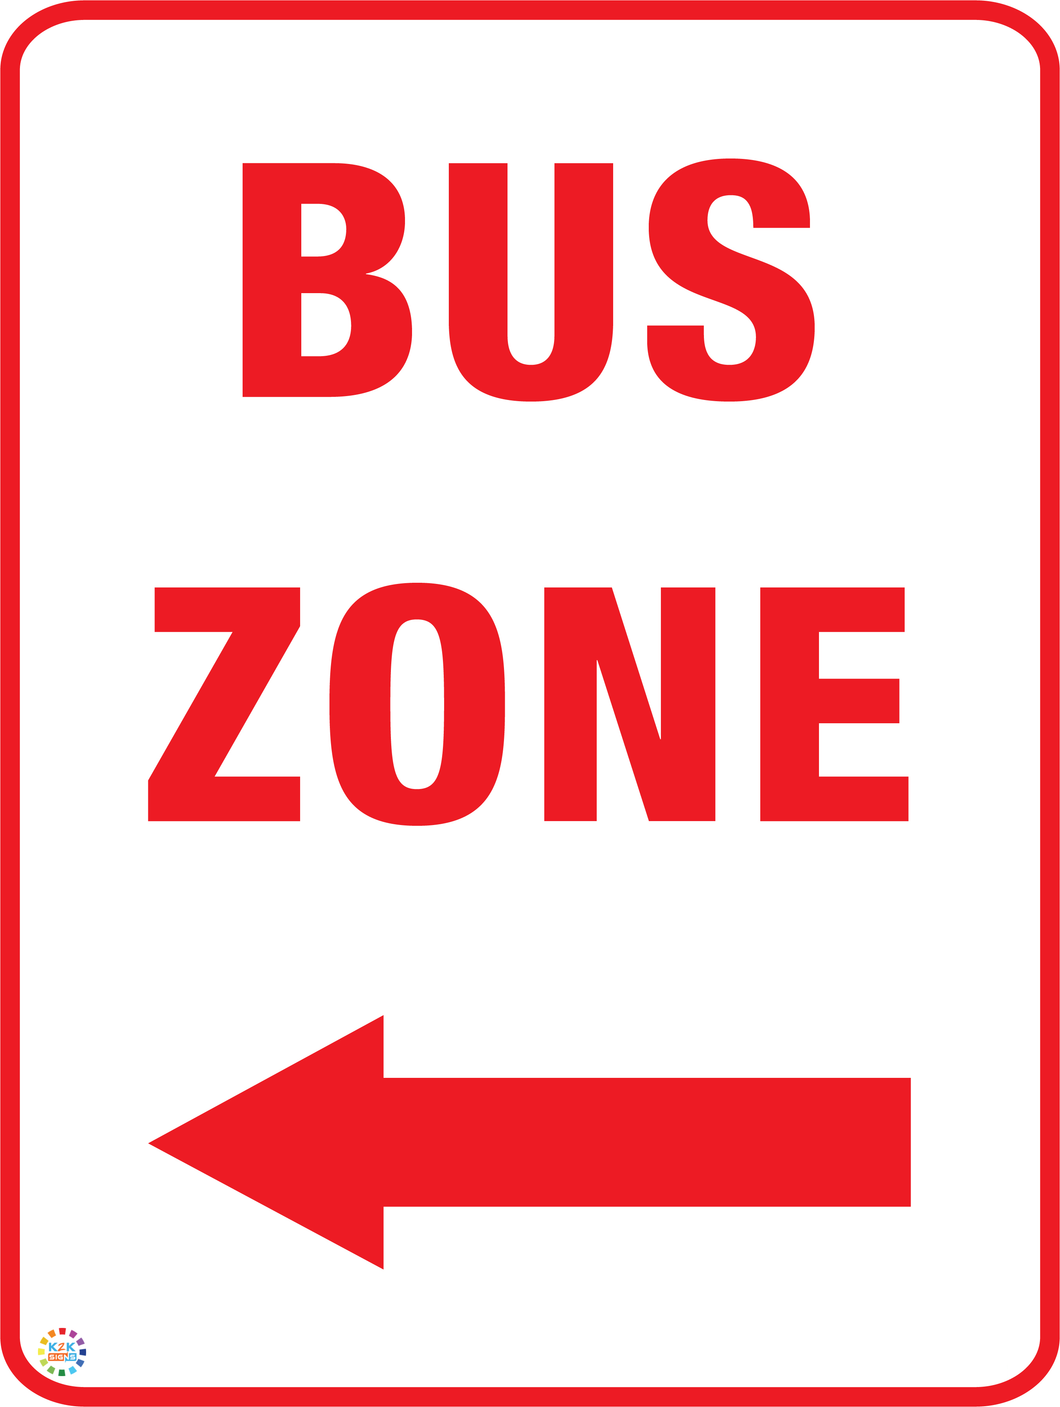 Bus Zone (Left Arrow) Sign